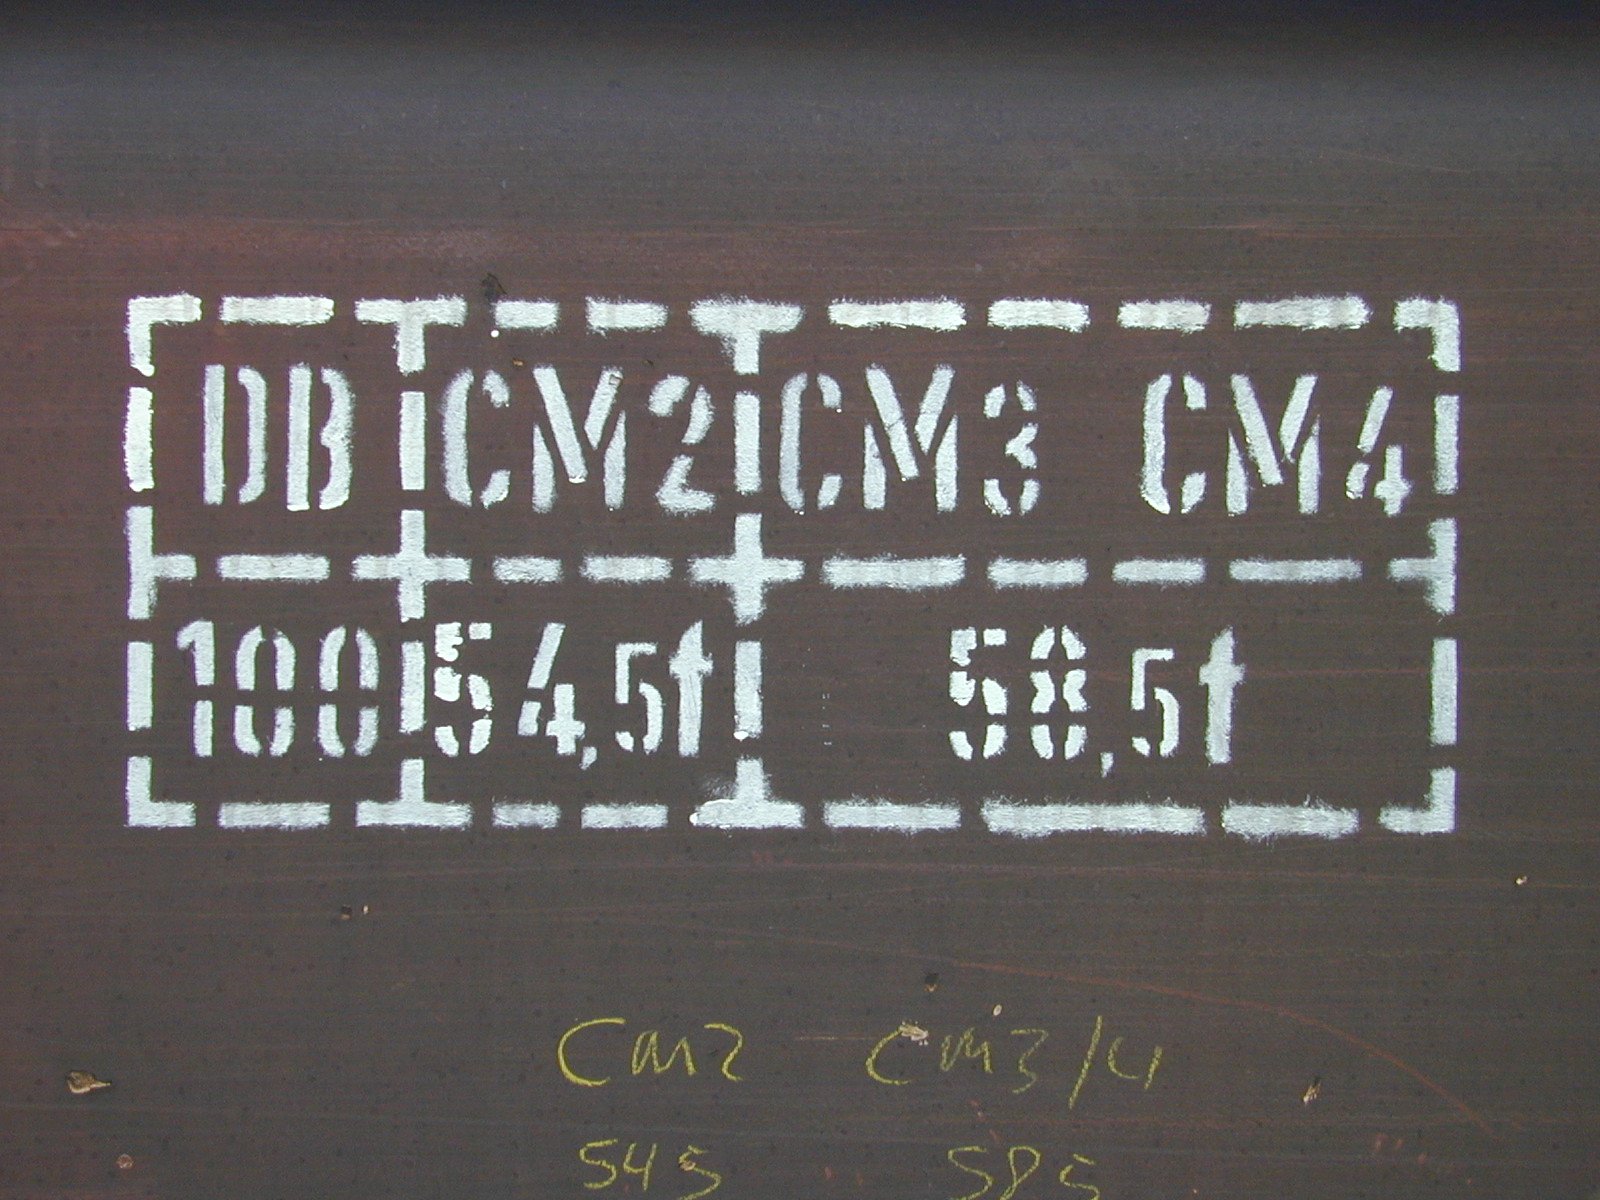 typo typography modern spraypaint paint d b db c m 2 1 0 5 4 s t st 8 metal